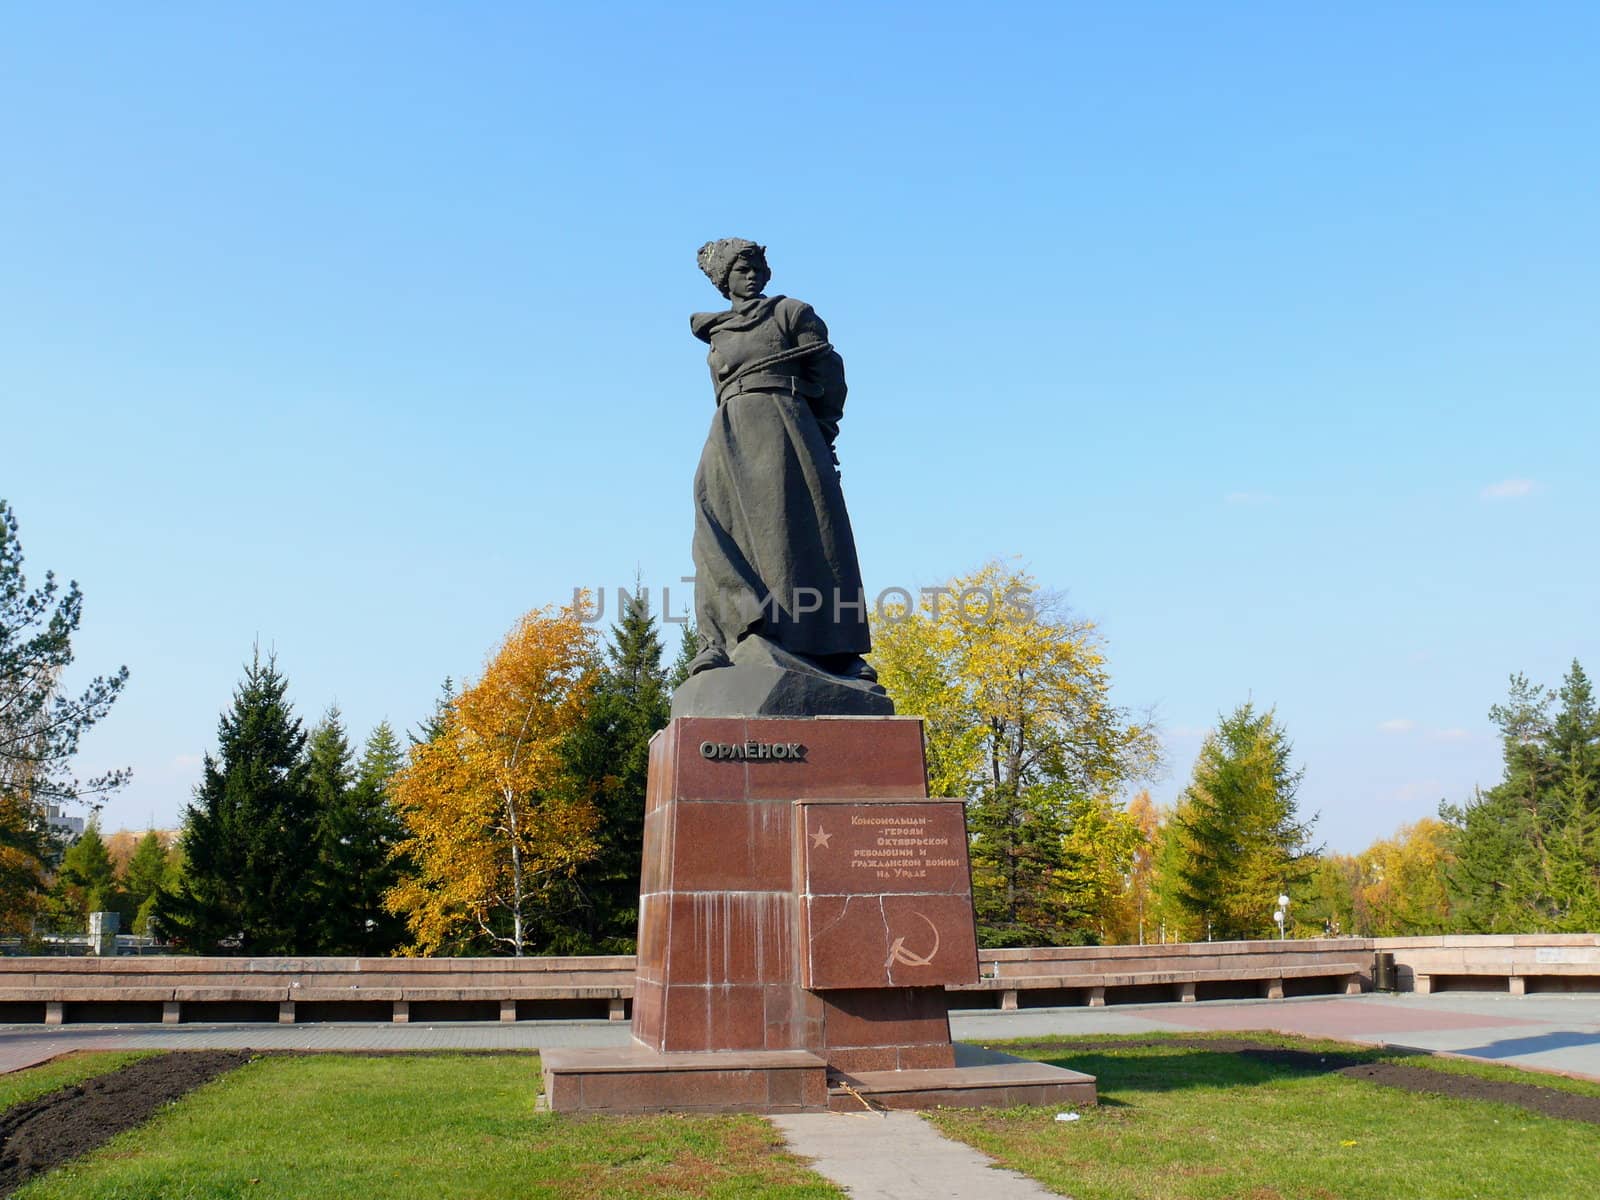 Monument "Orlenok" in "Aloe pole" square - Chtlyabinsk by Stoyanov